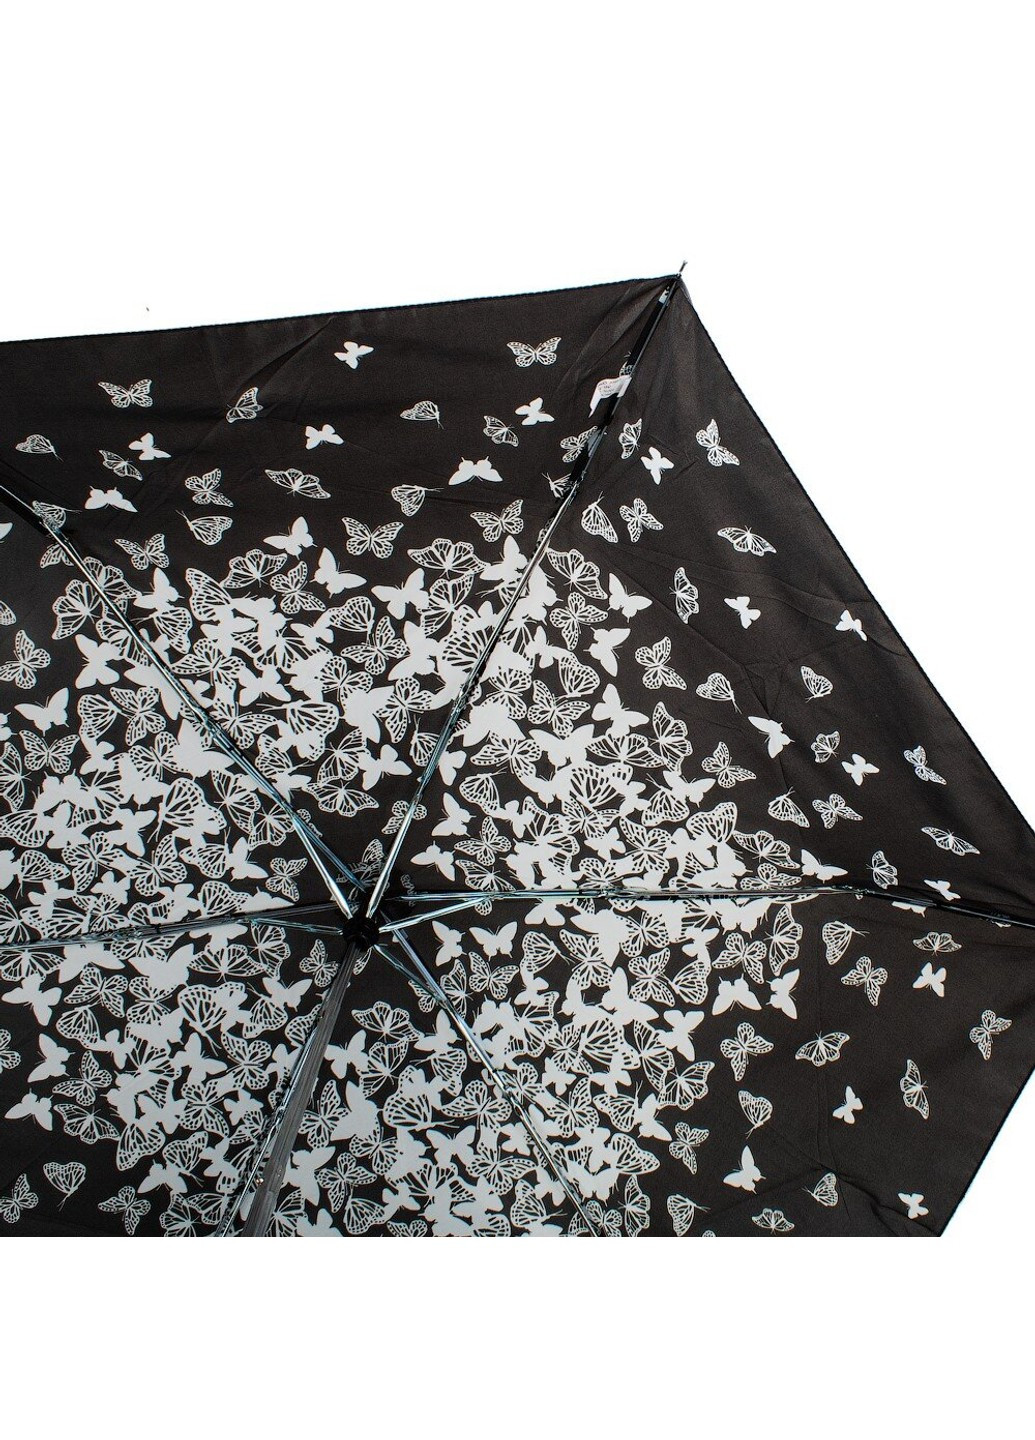 Механический женский зонтик FULL412-stencil-butterfly Incognito (263135628)